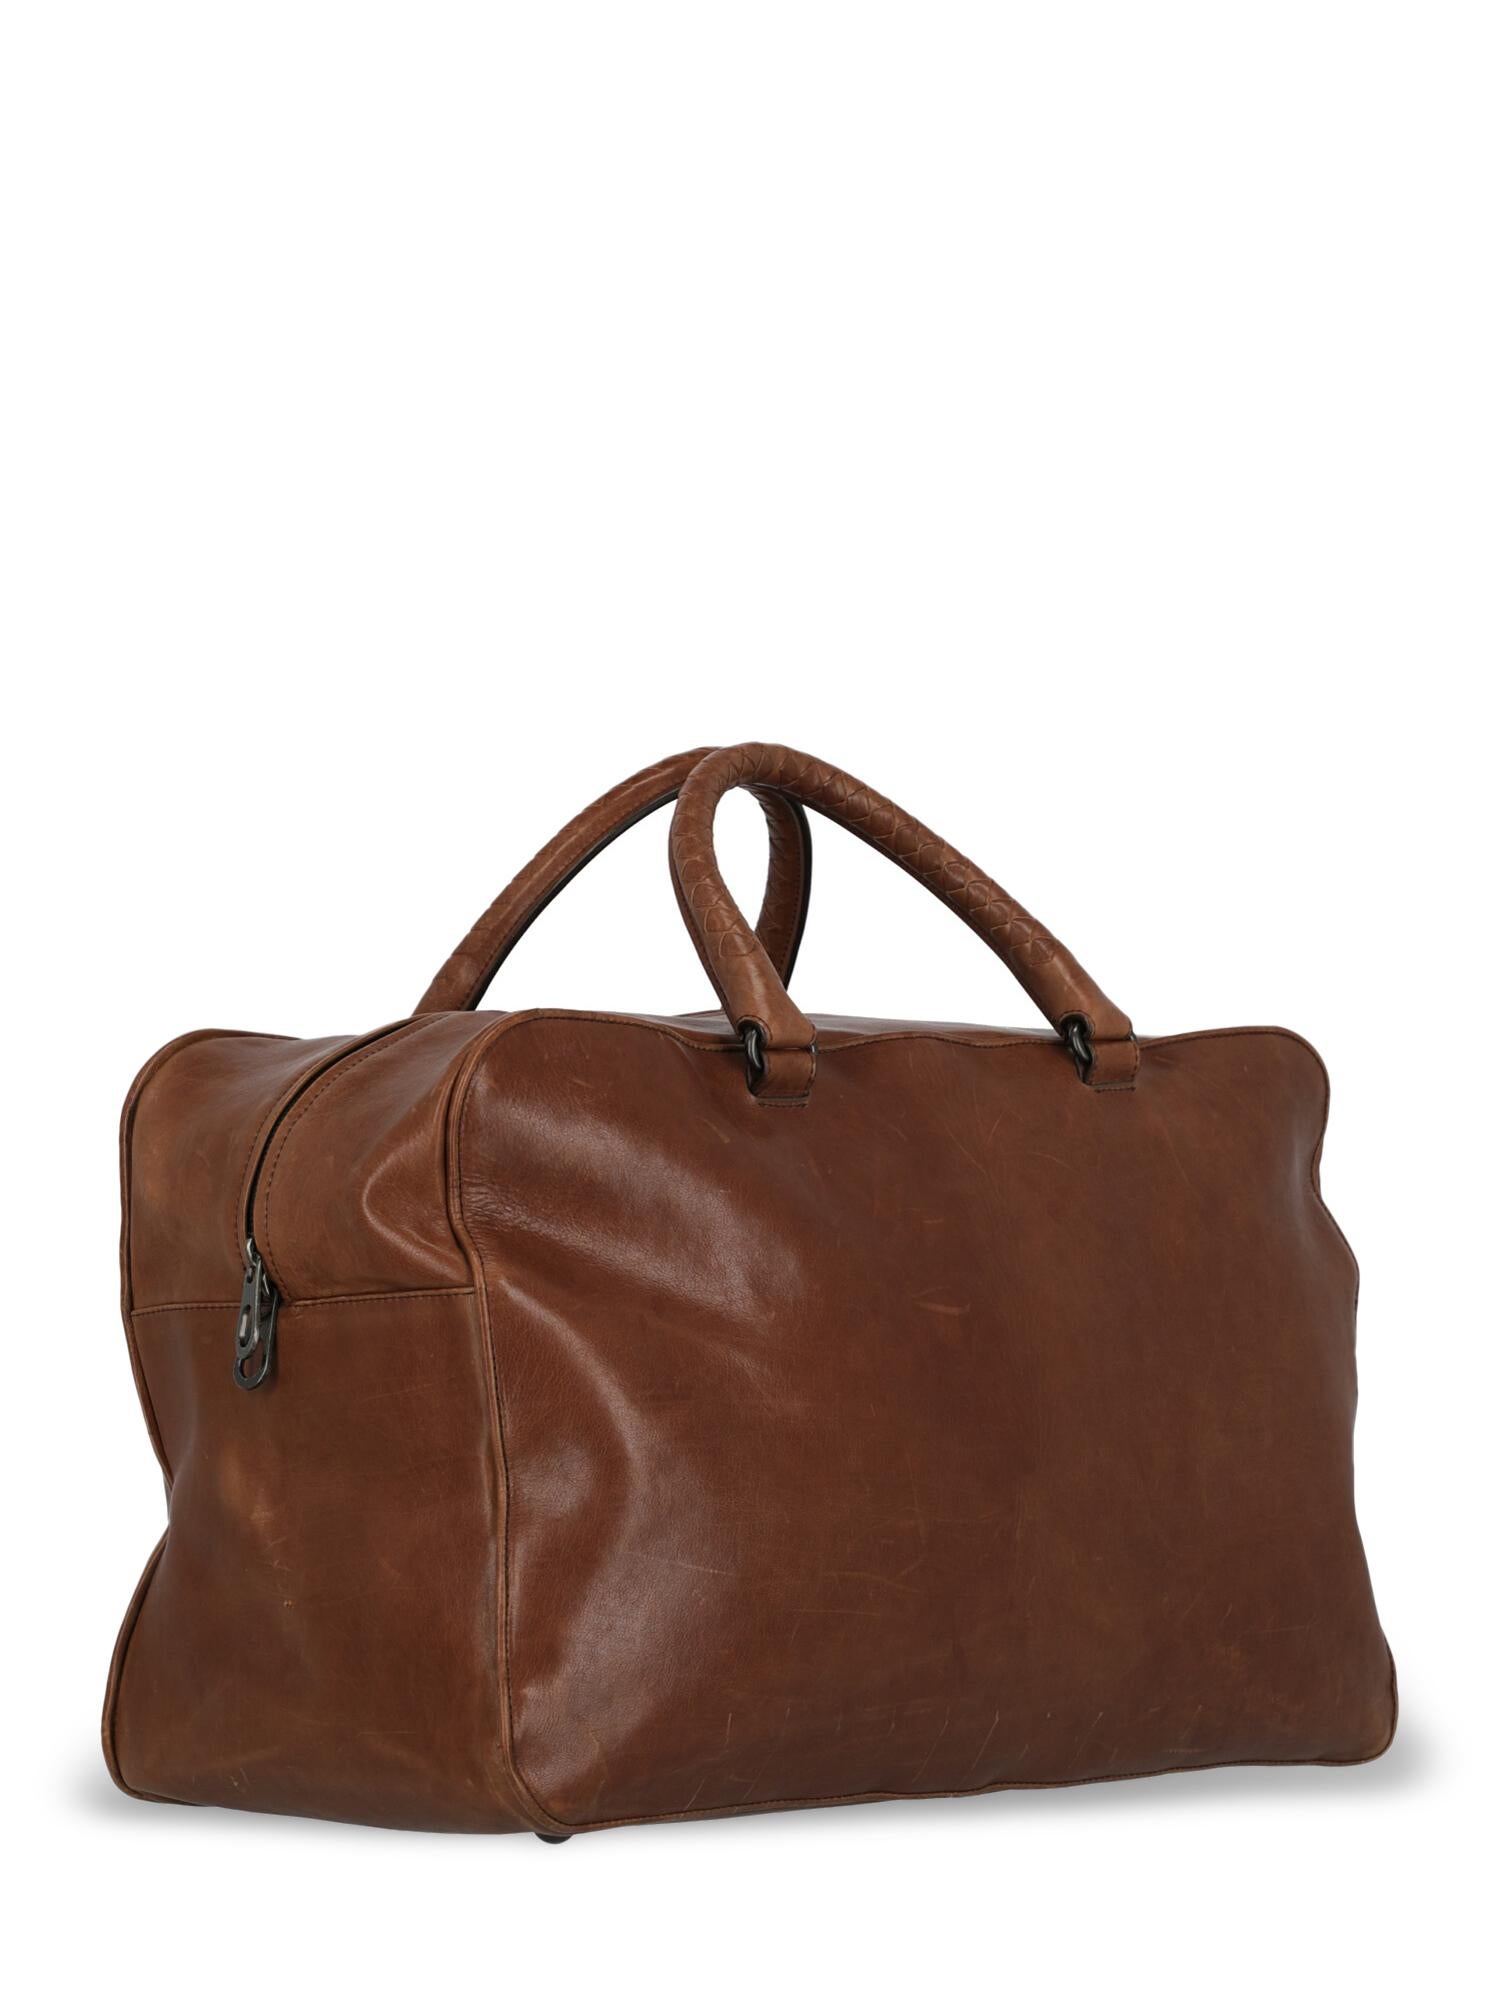 Bottega Veneta Woman Handbag Brown  In Fair Condition For Sale In Milan, IT